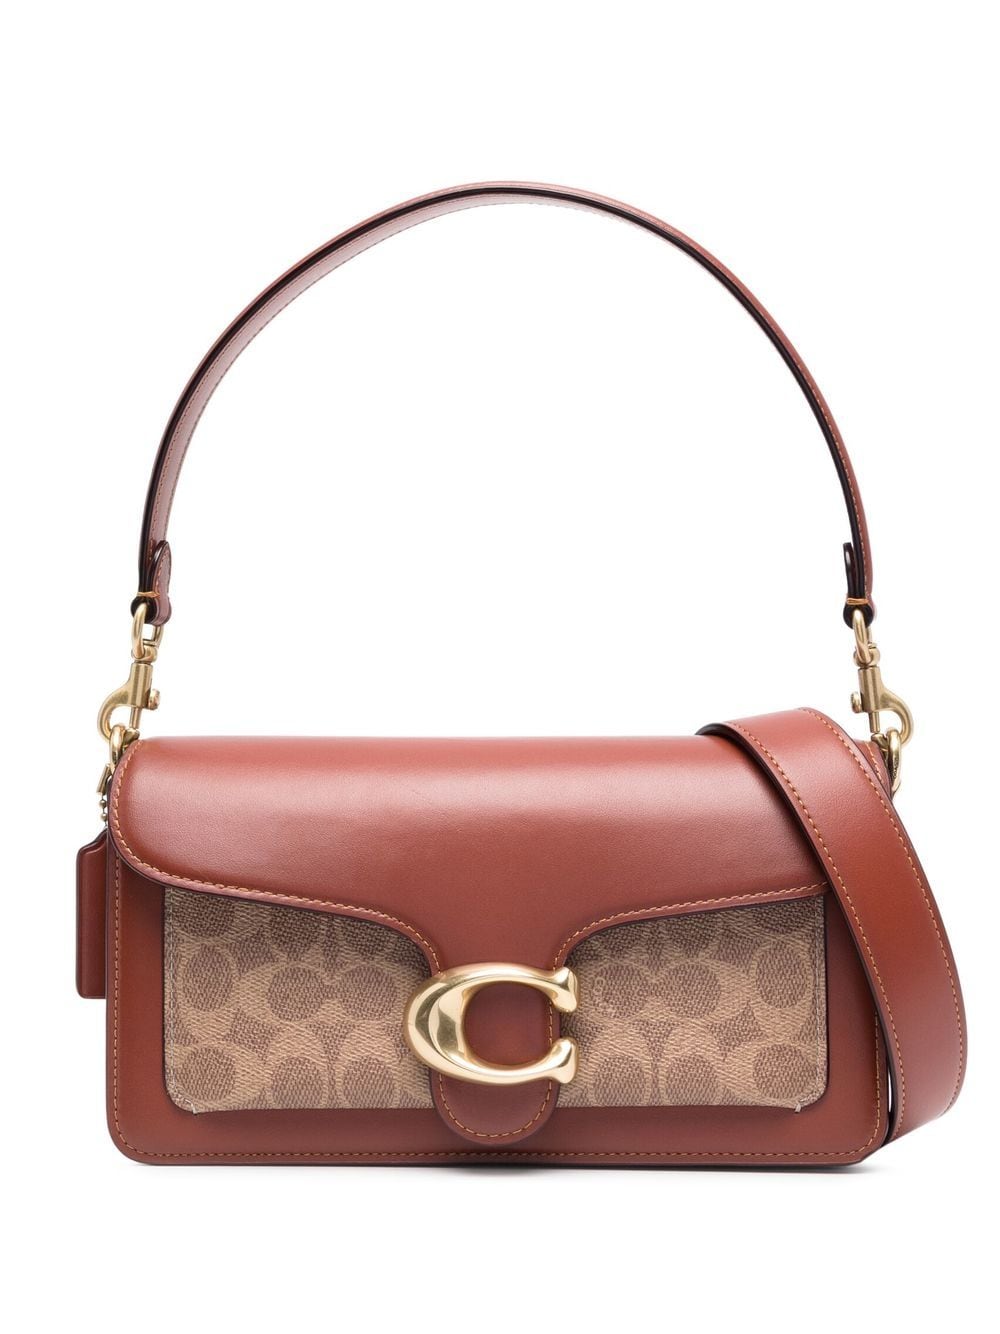 COACH Timeless and Elegant Tabby Handbag in Monogrammed Brown